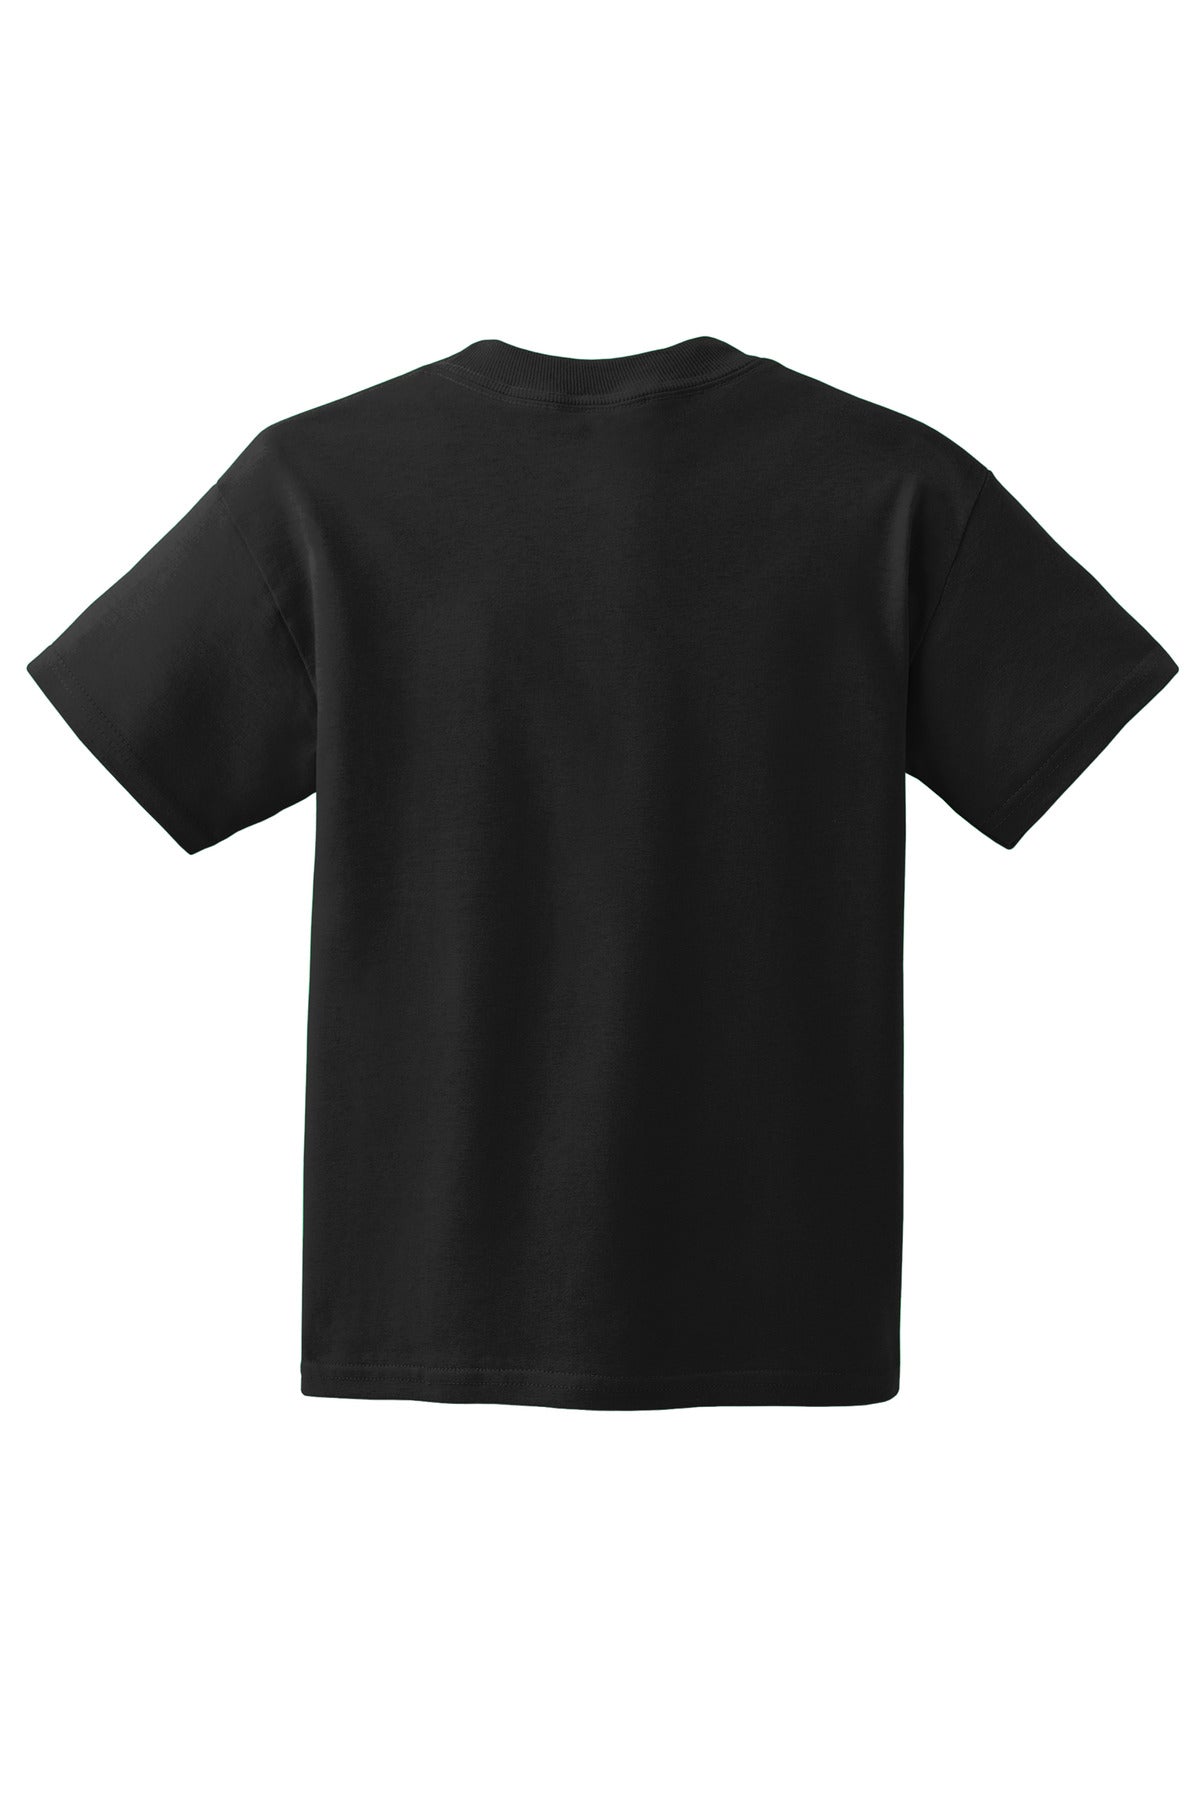 Hanes® - Youth Authentic 100% Cotton T-Shirt. 5450 - DFW Impression